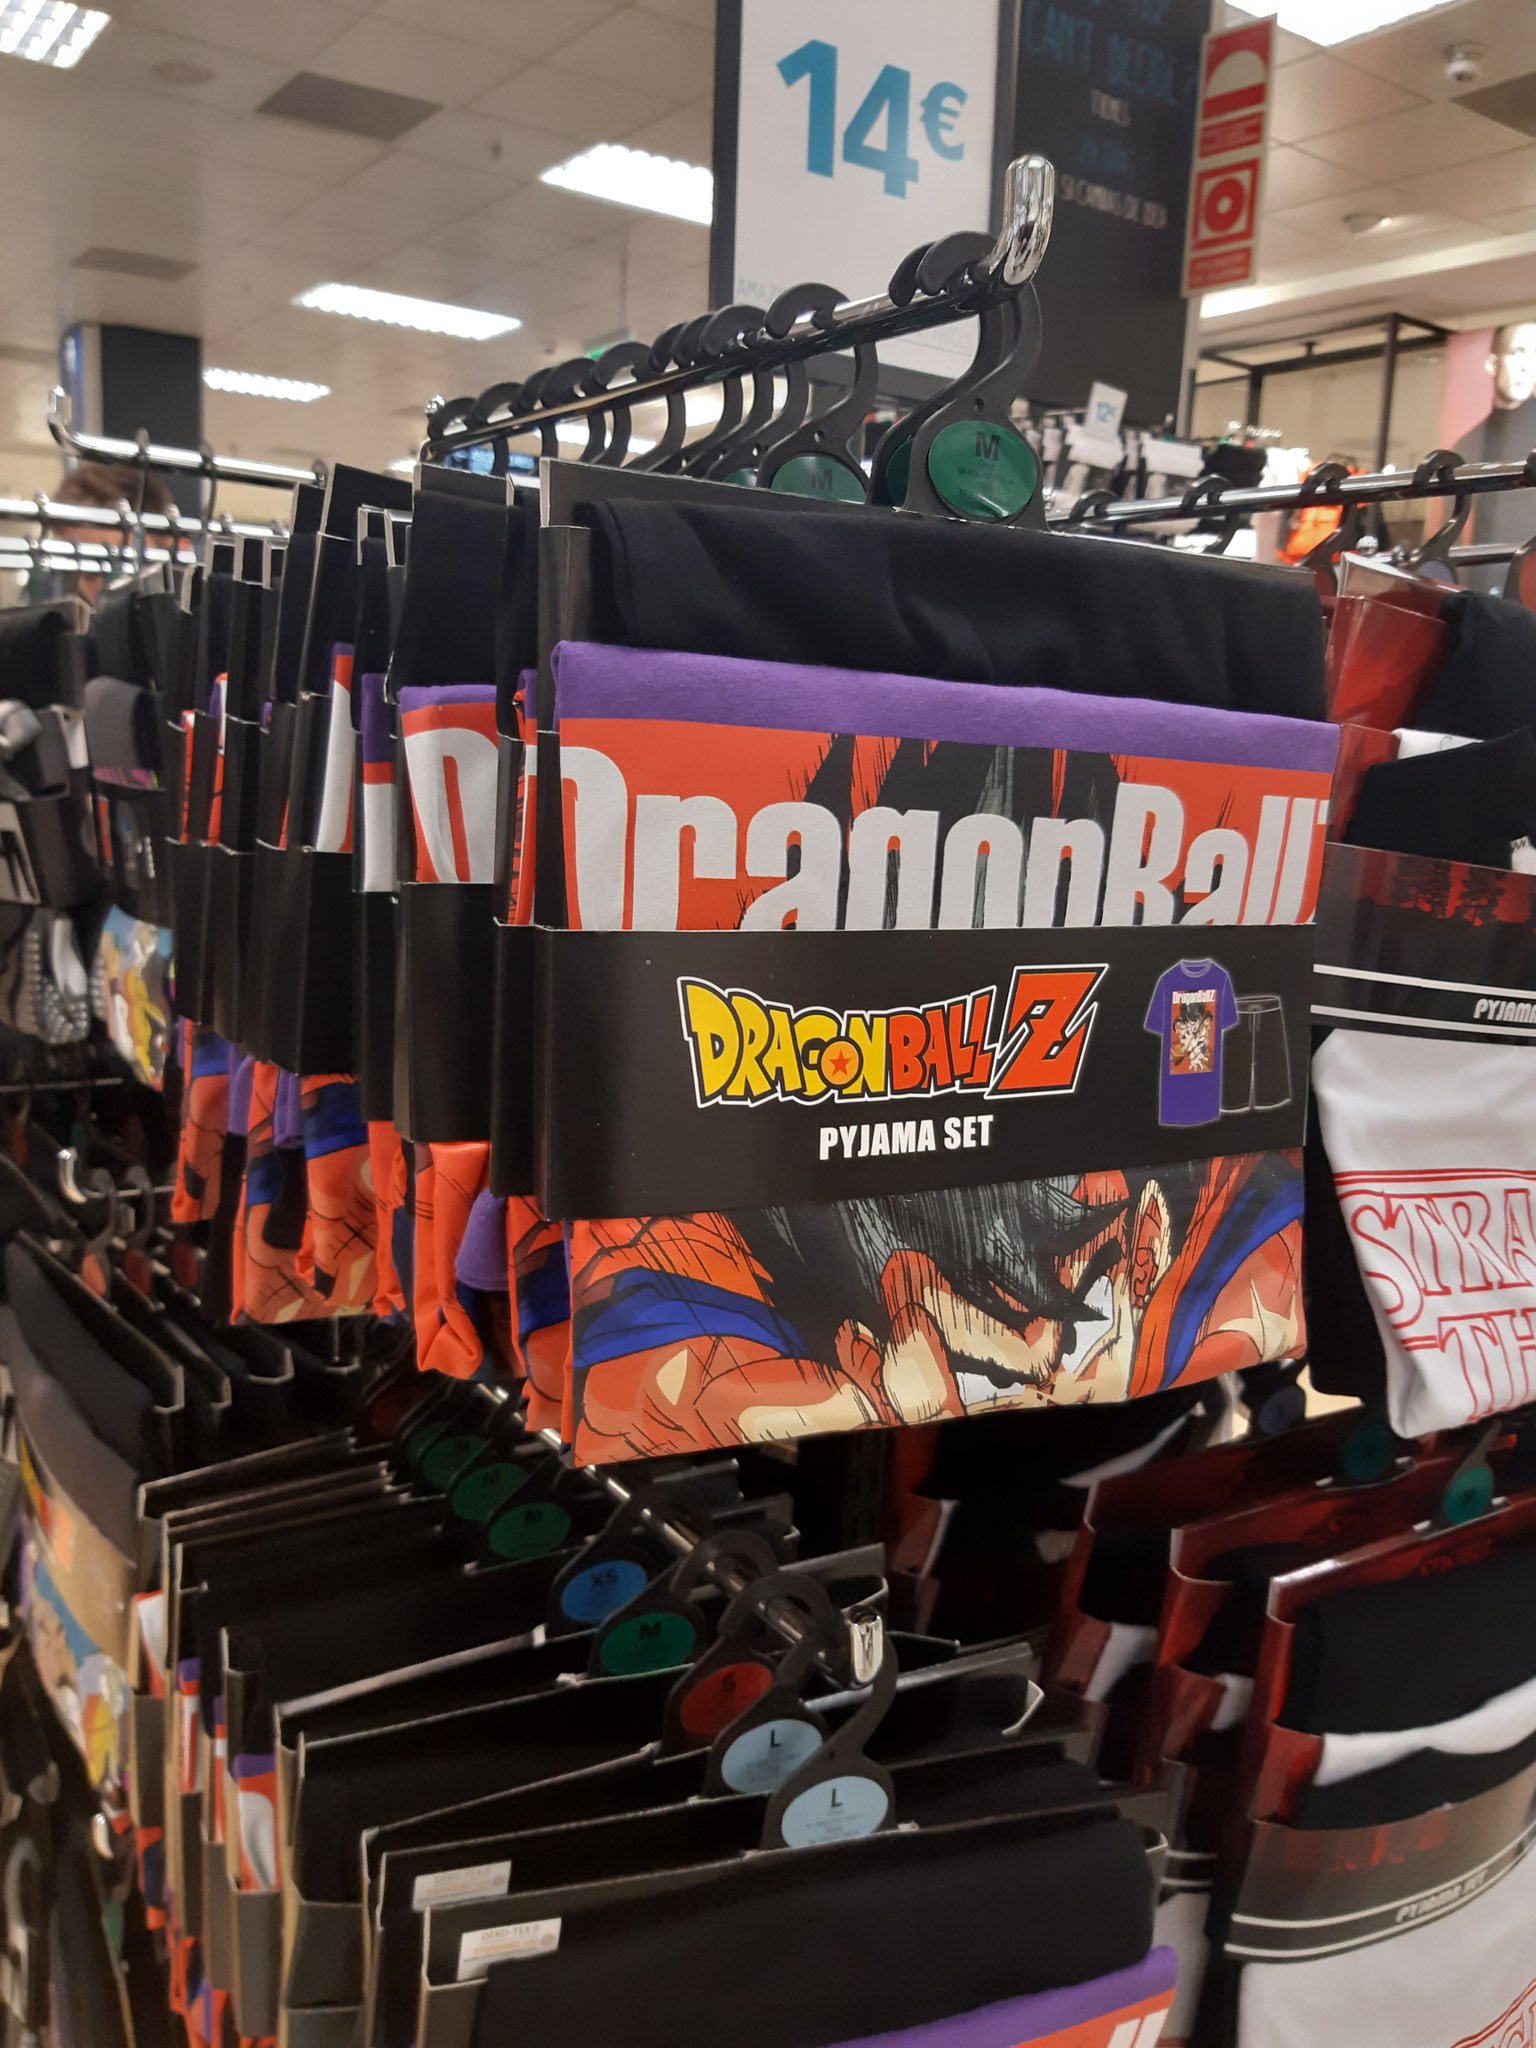 Alberto 🎮 on Twitter: "Nuevo pijama veraniego de Dragon Ball Z en Primark, @MrKaytos. A buen precio. https://t.co/GP7yhUaxup" Twitter